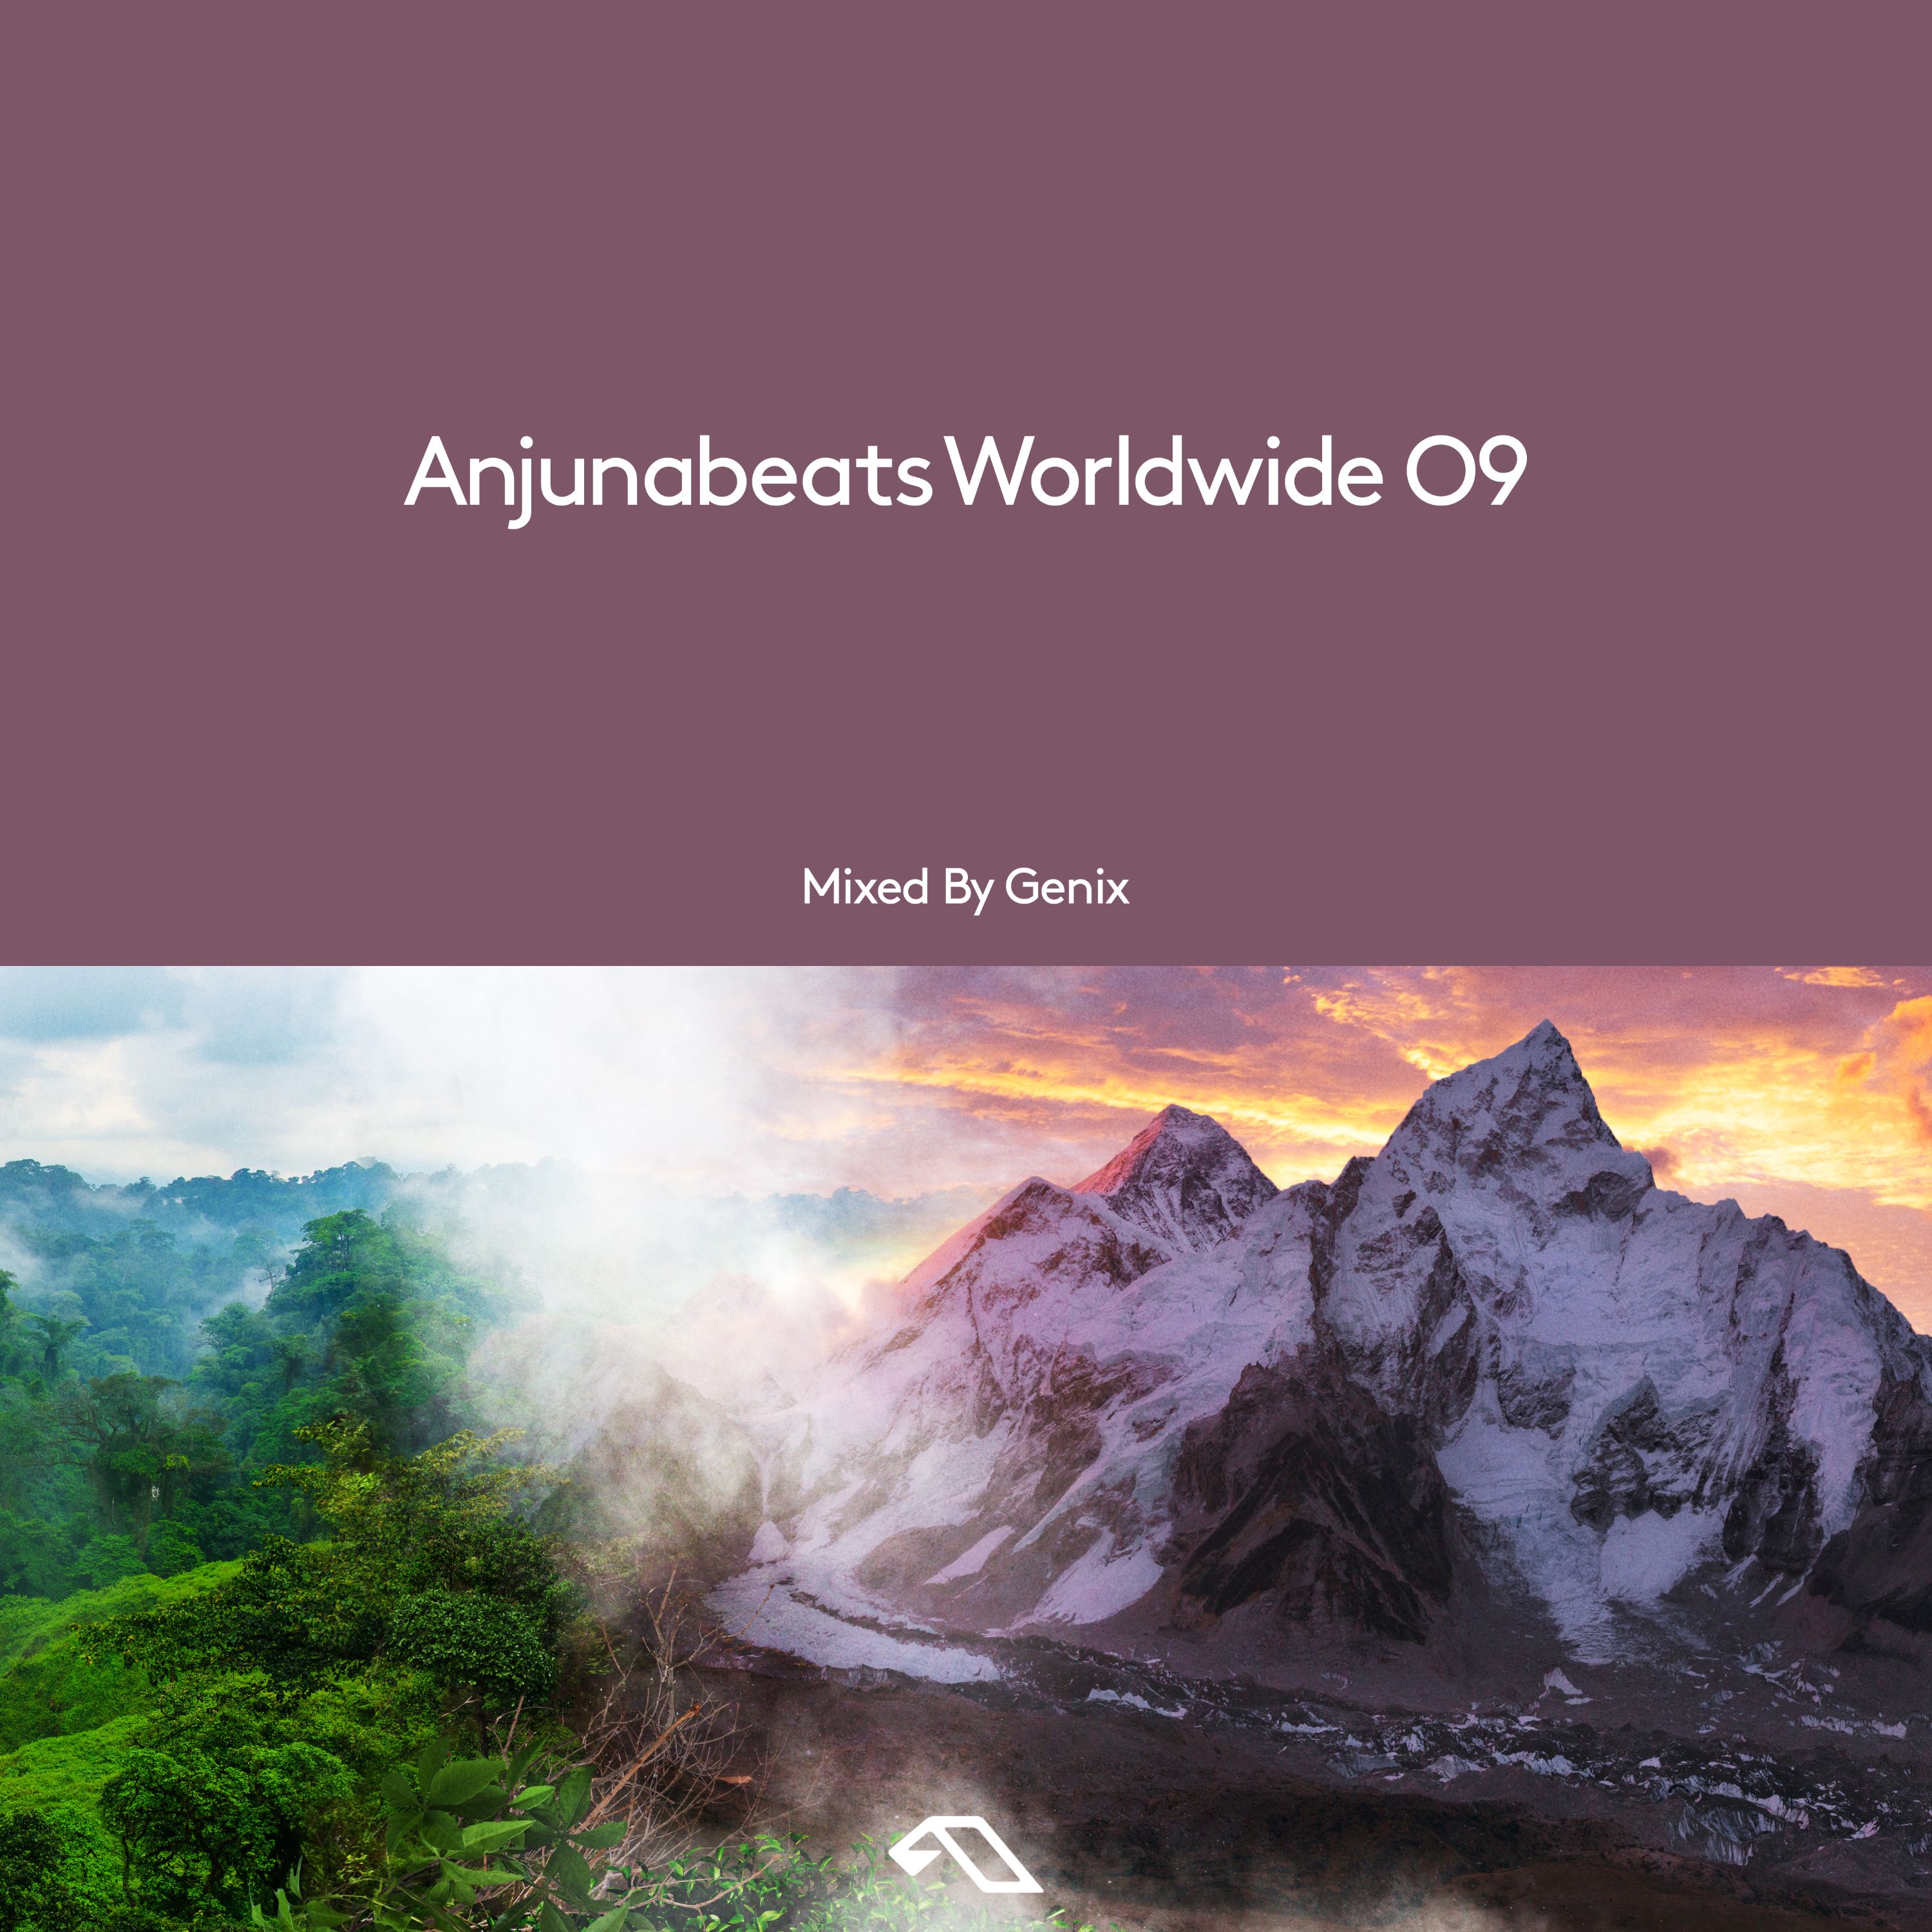 Anjunabeats Worldwide 09 - Mixed By Genix (Continuous Mix)